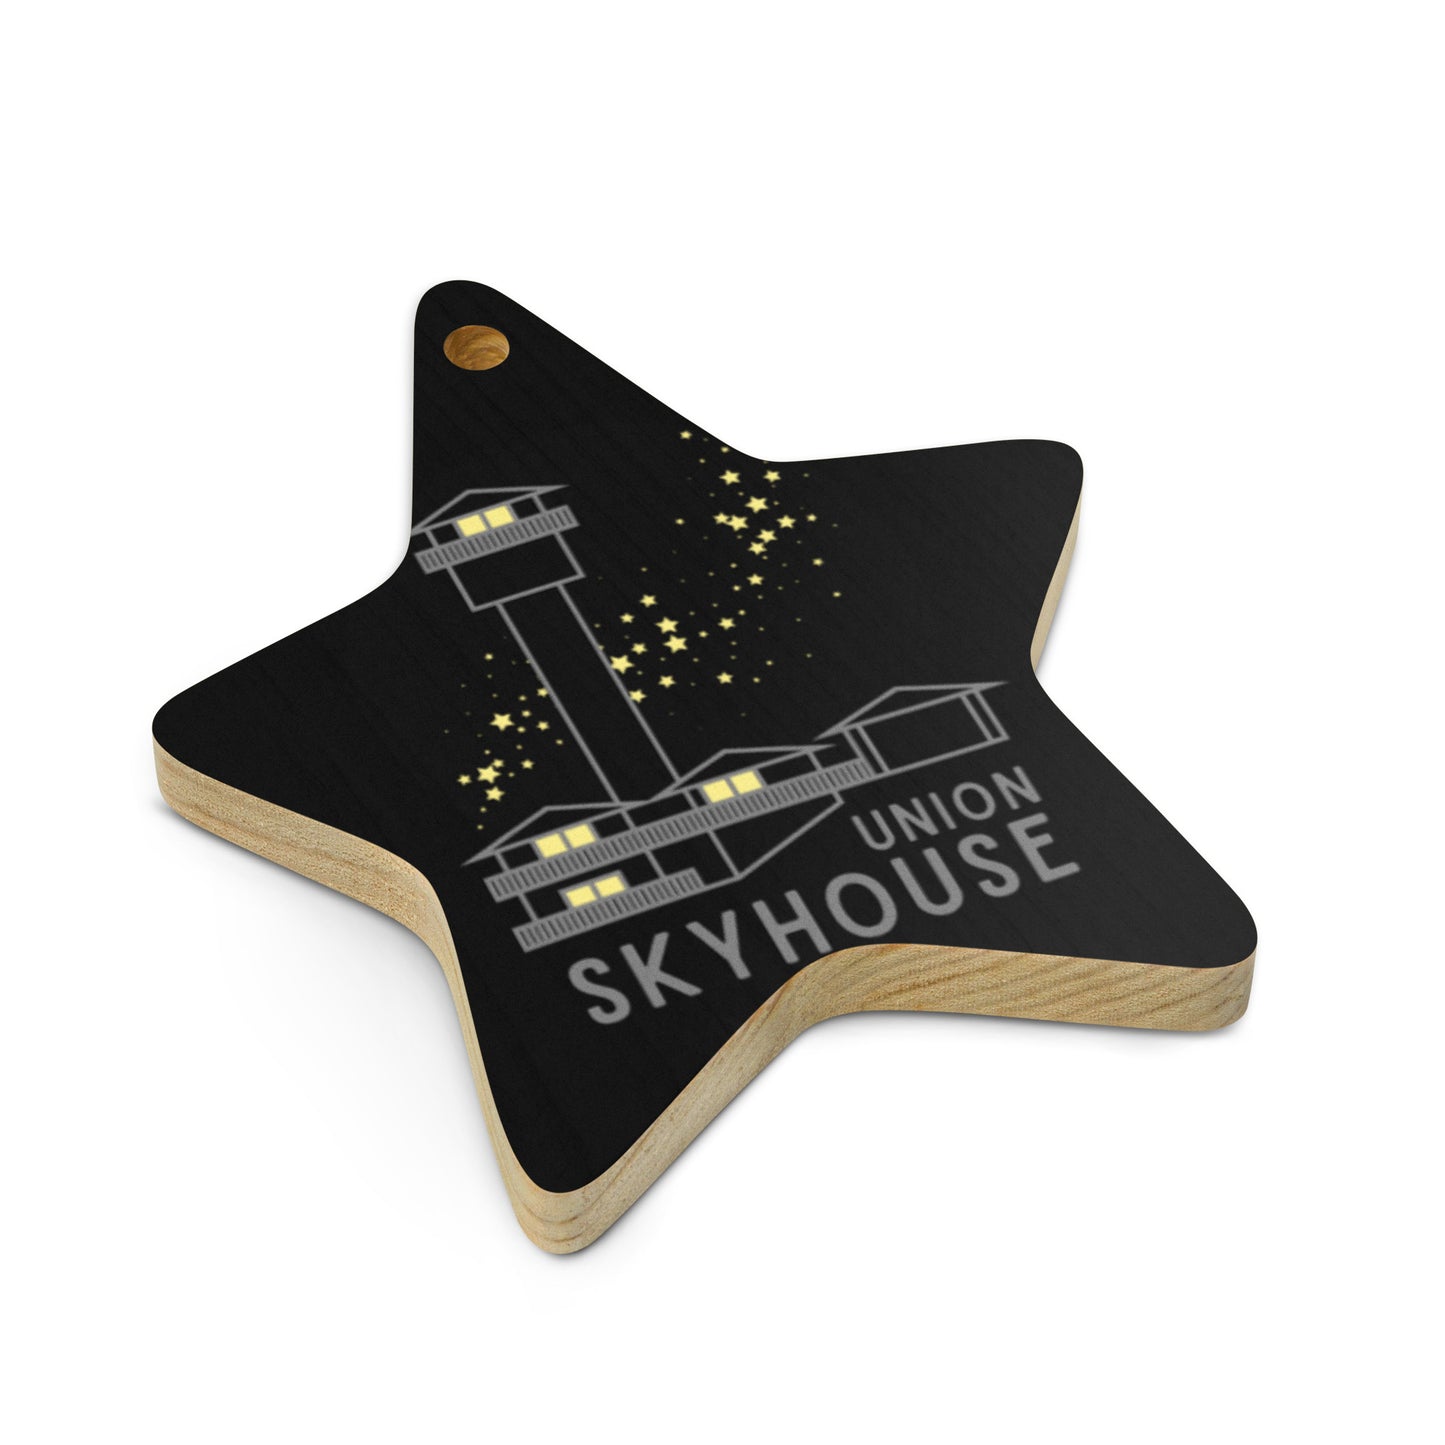 Skyhouse Nightscape Ornament